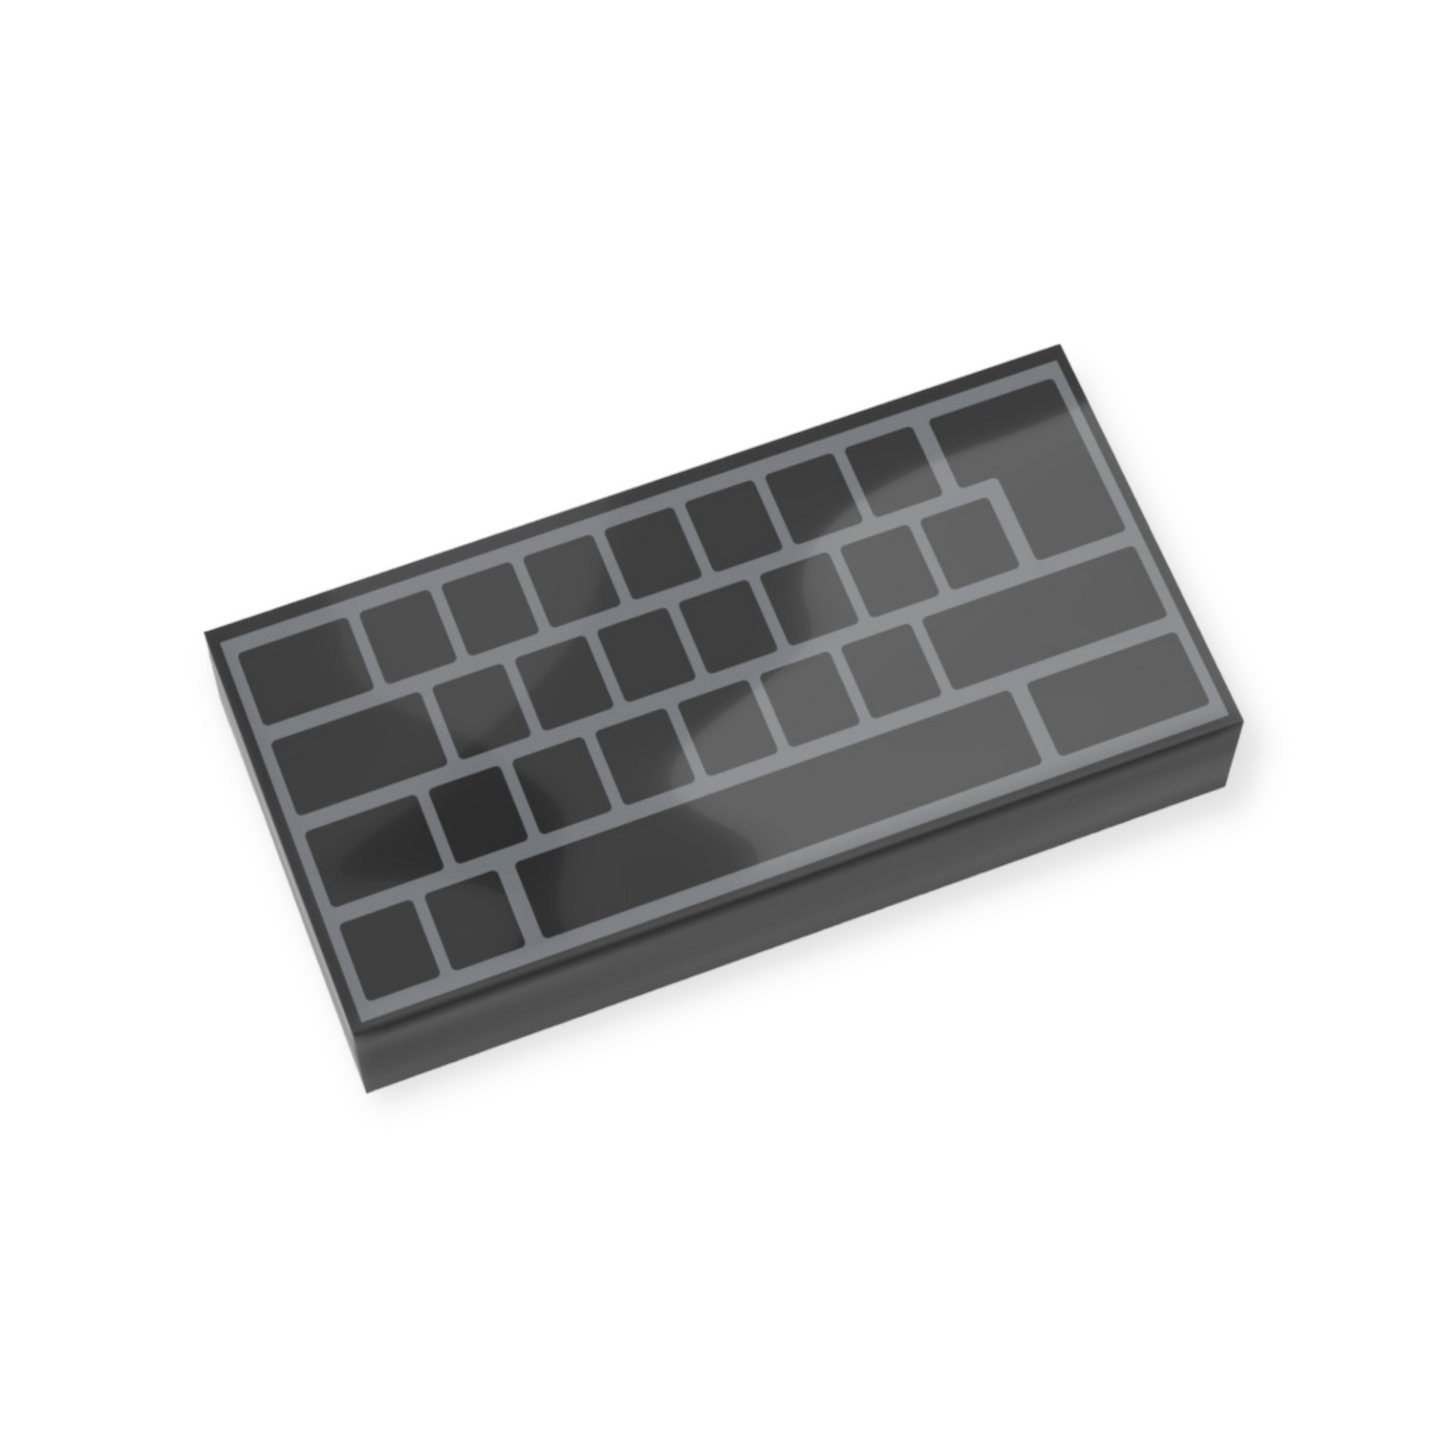 LEGO 1x2 Tile - Tastatur in Black